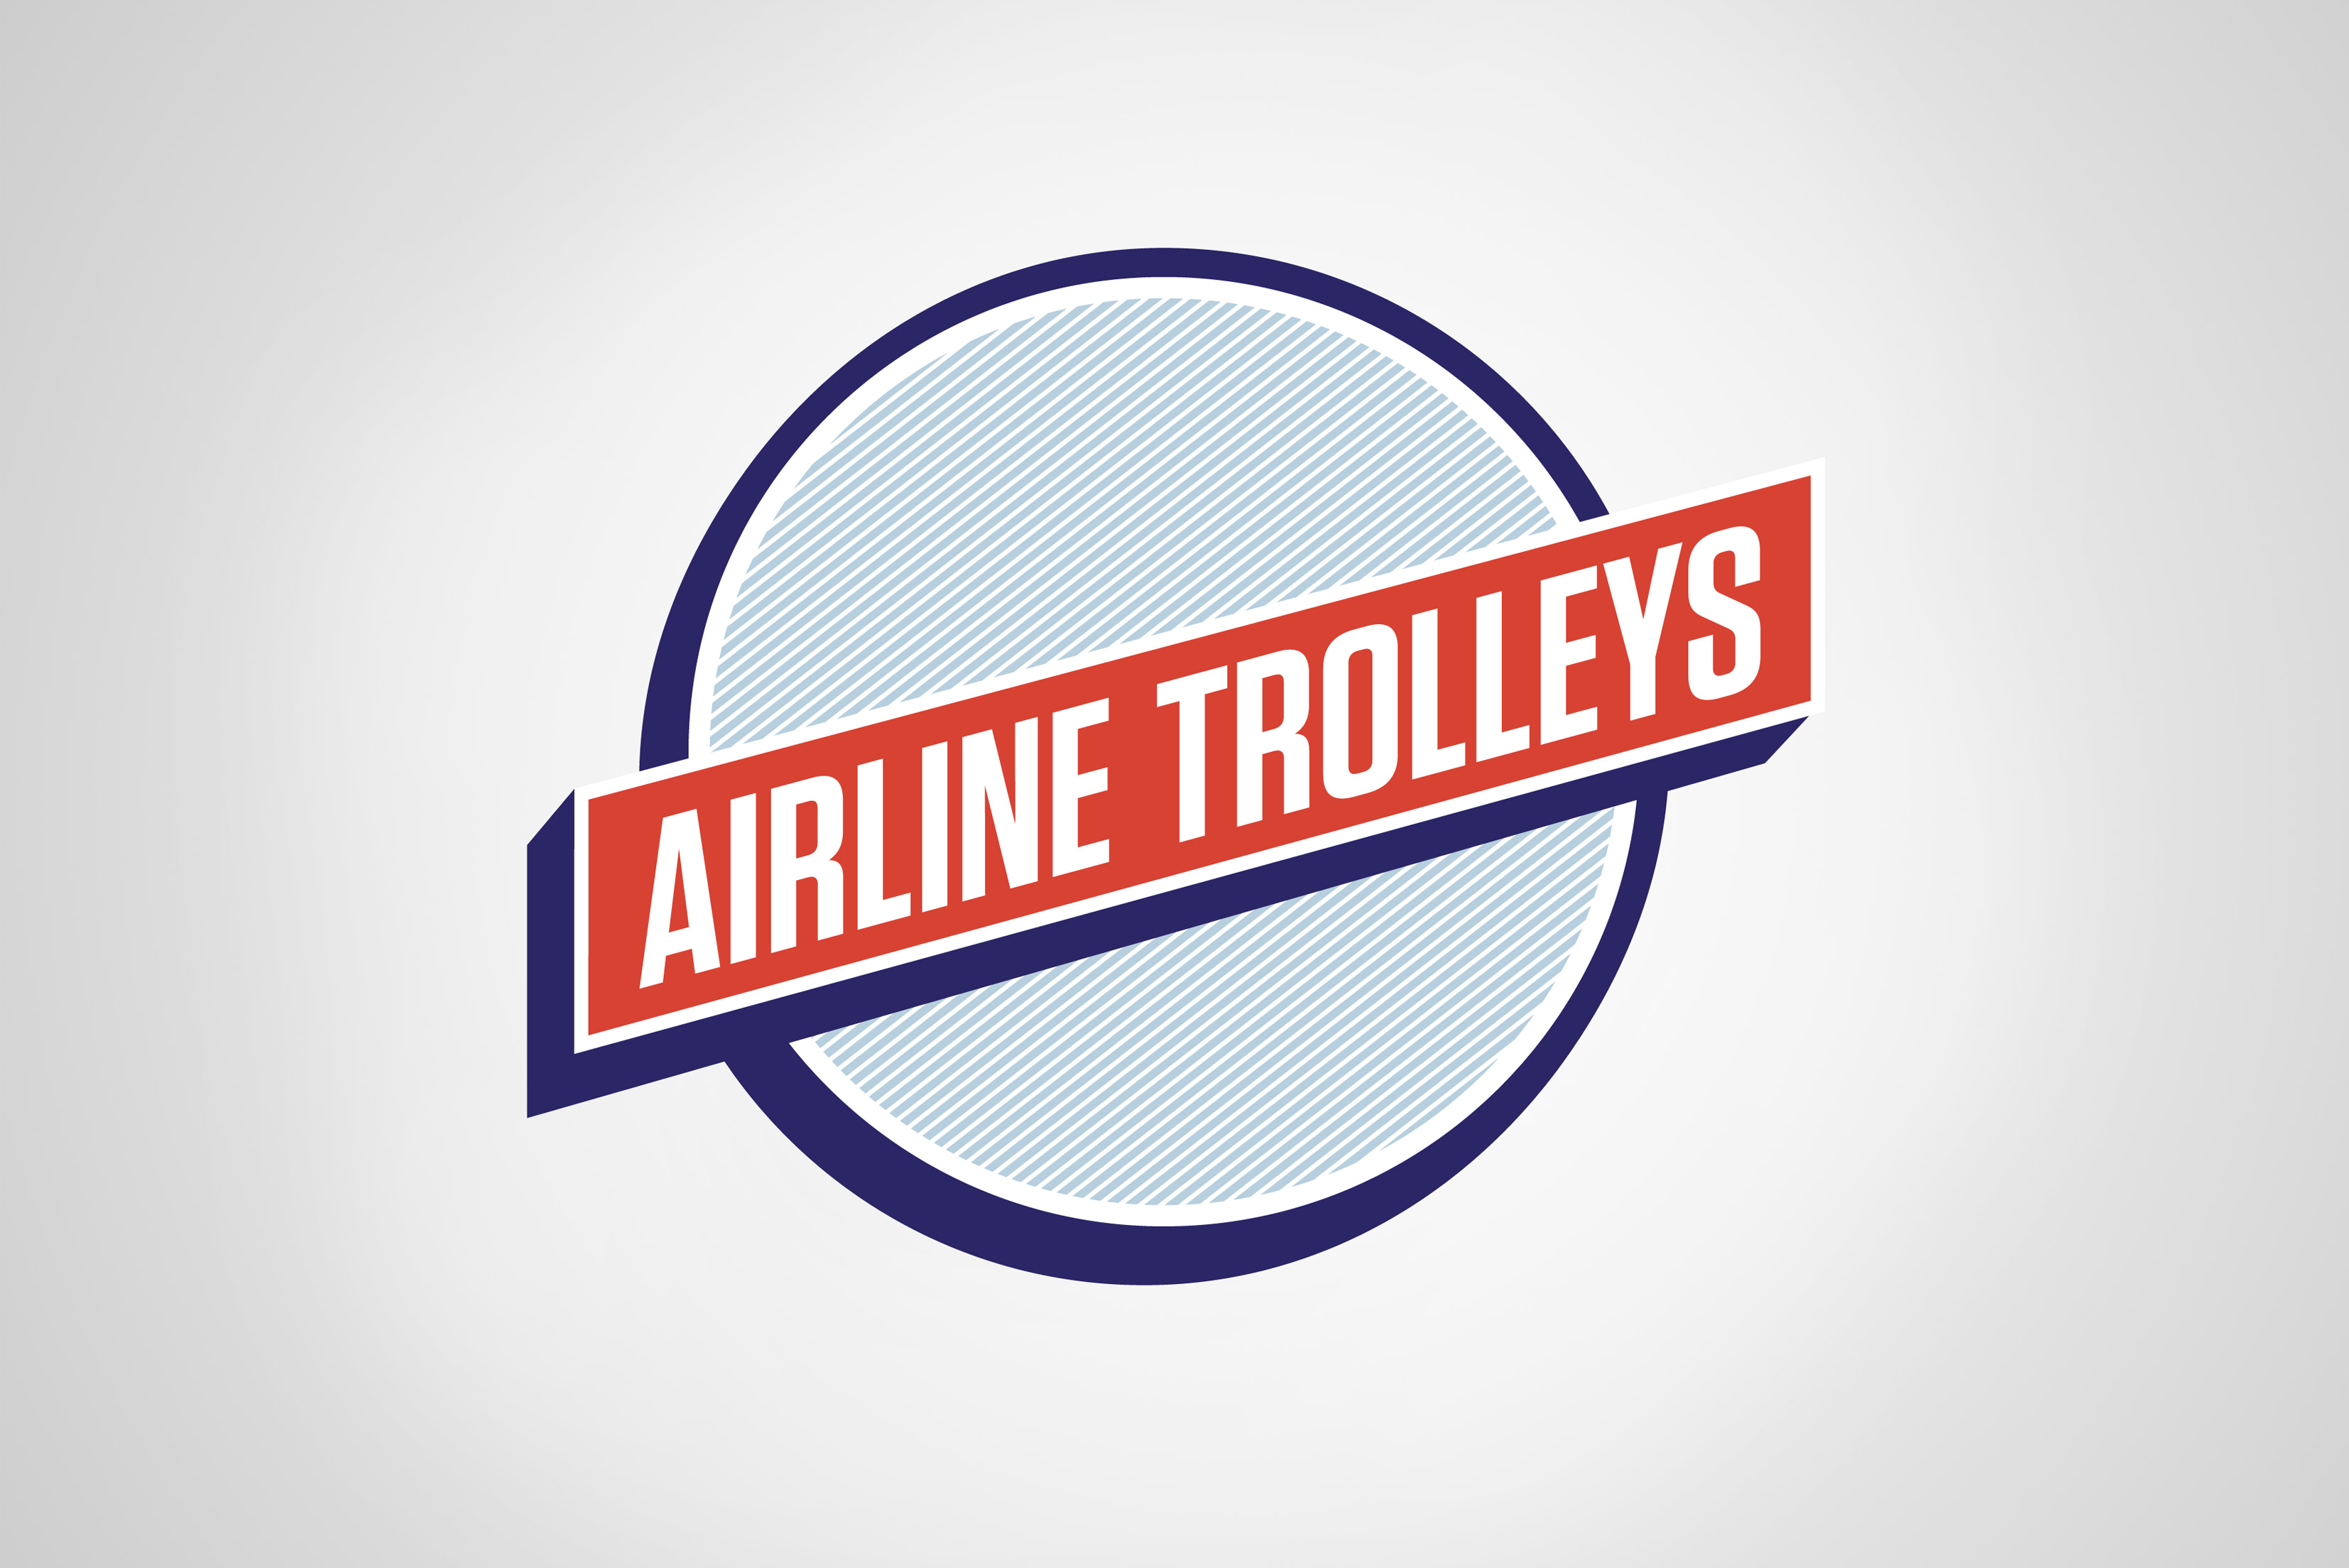 Airline Trolleys